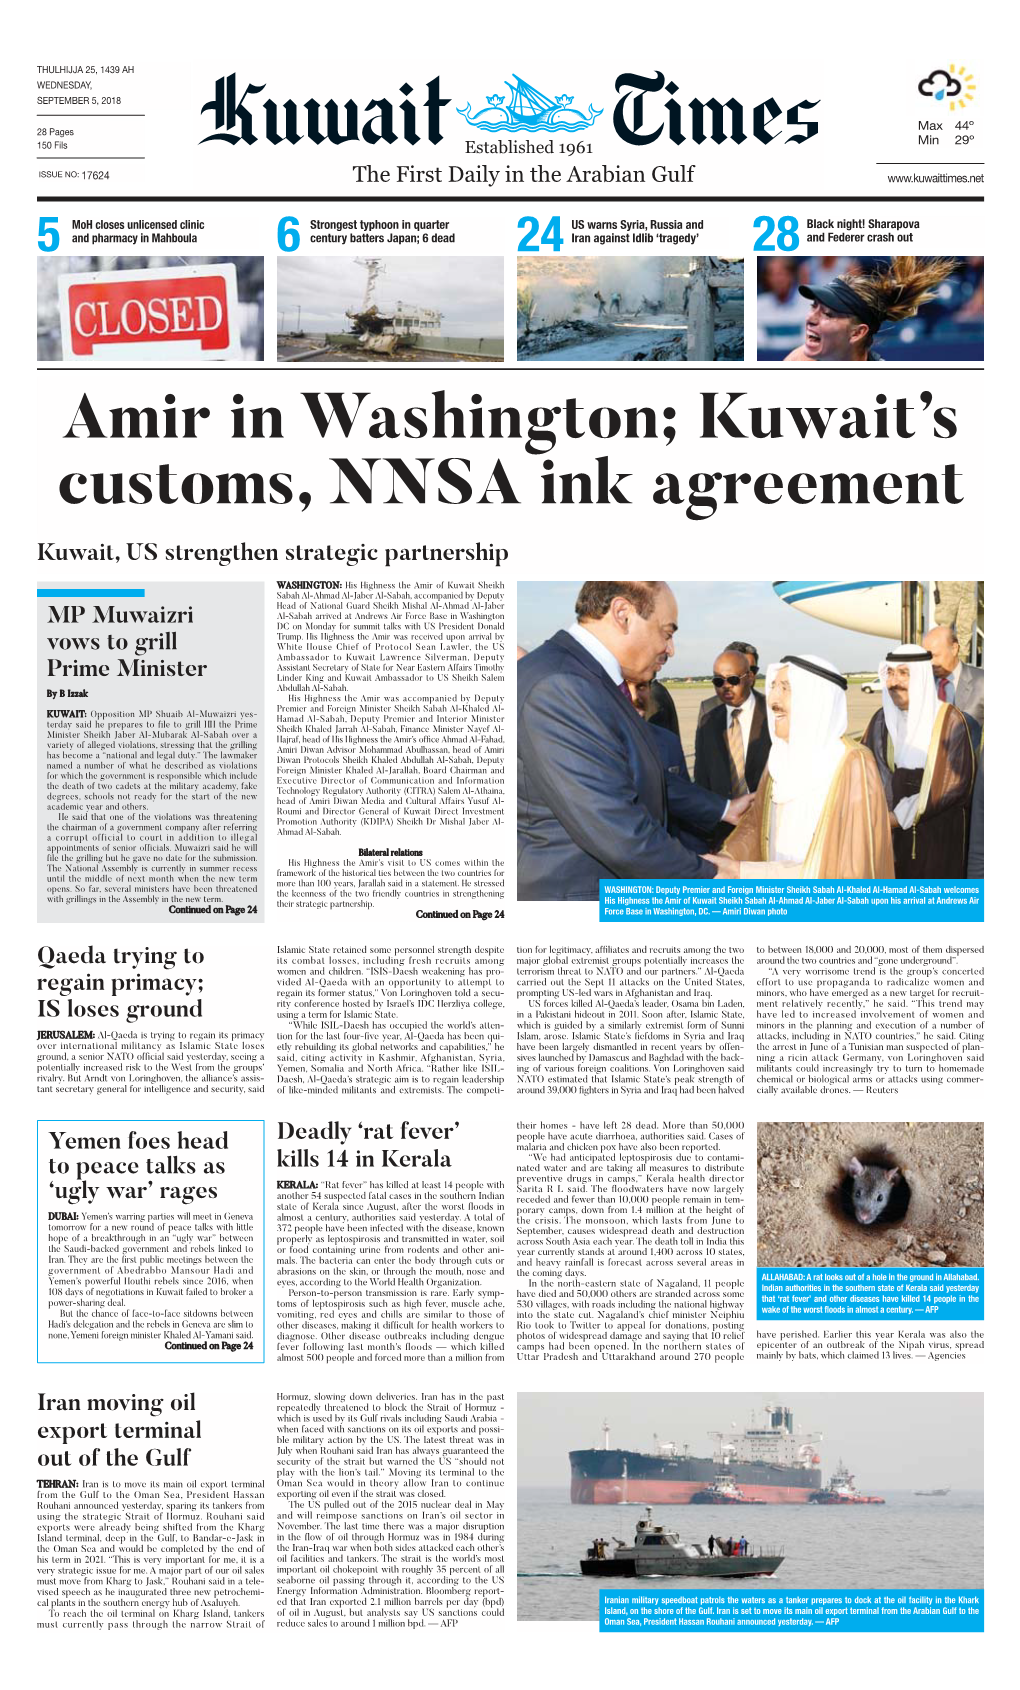 Kuwait's Customs, NNSA Ink Agreement